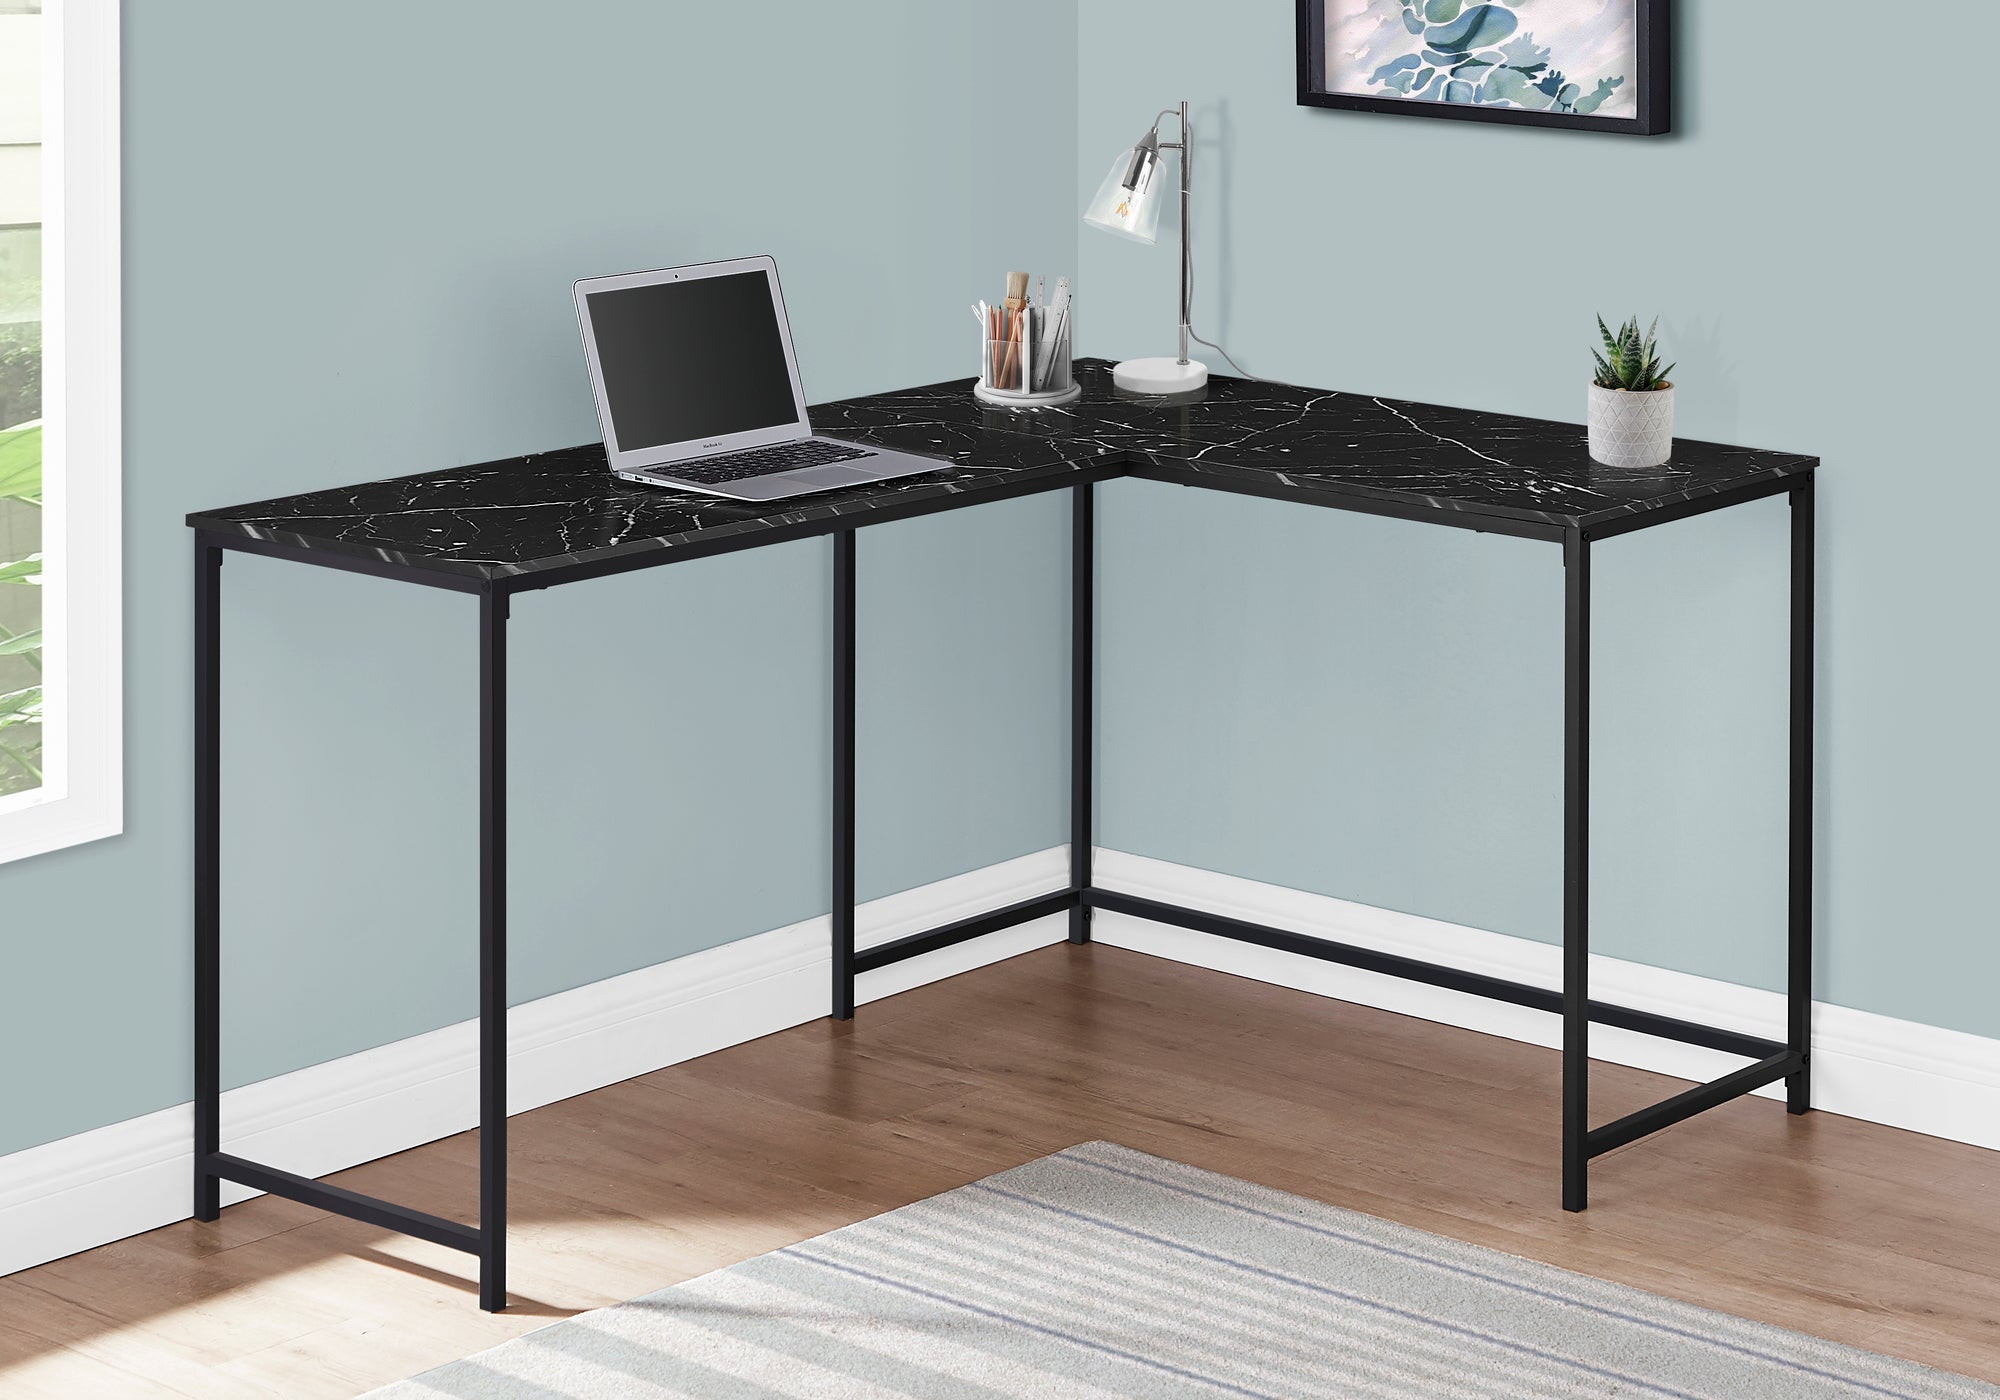 MN-127396    Computer Desk, Home Office, Corner, 58"L, L Shape, Work, Laptop, Black Marble Look Laminate, Black Metal, Contemporary, Modern